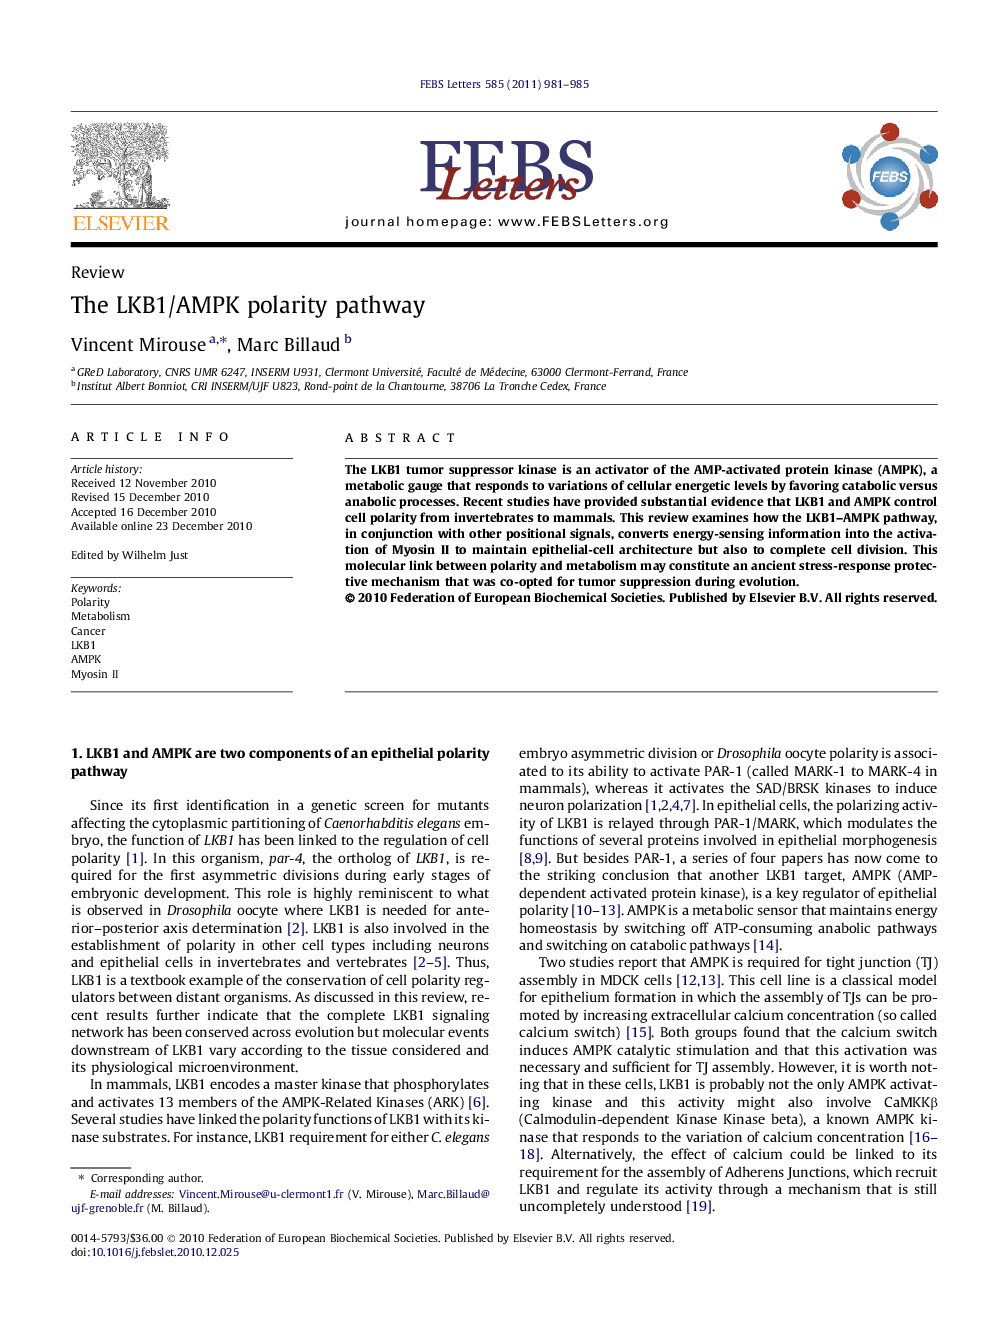 The LKB1/AMPK polarity pathway